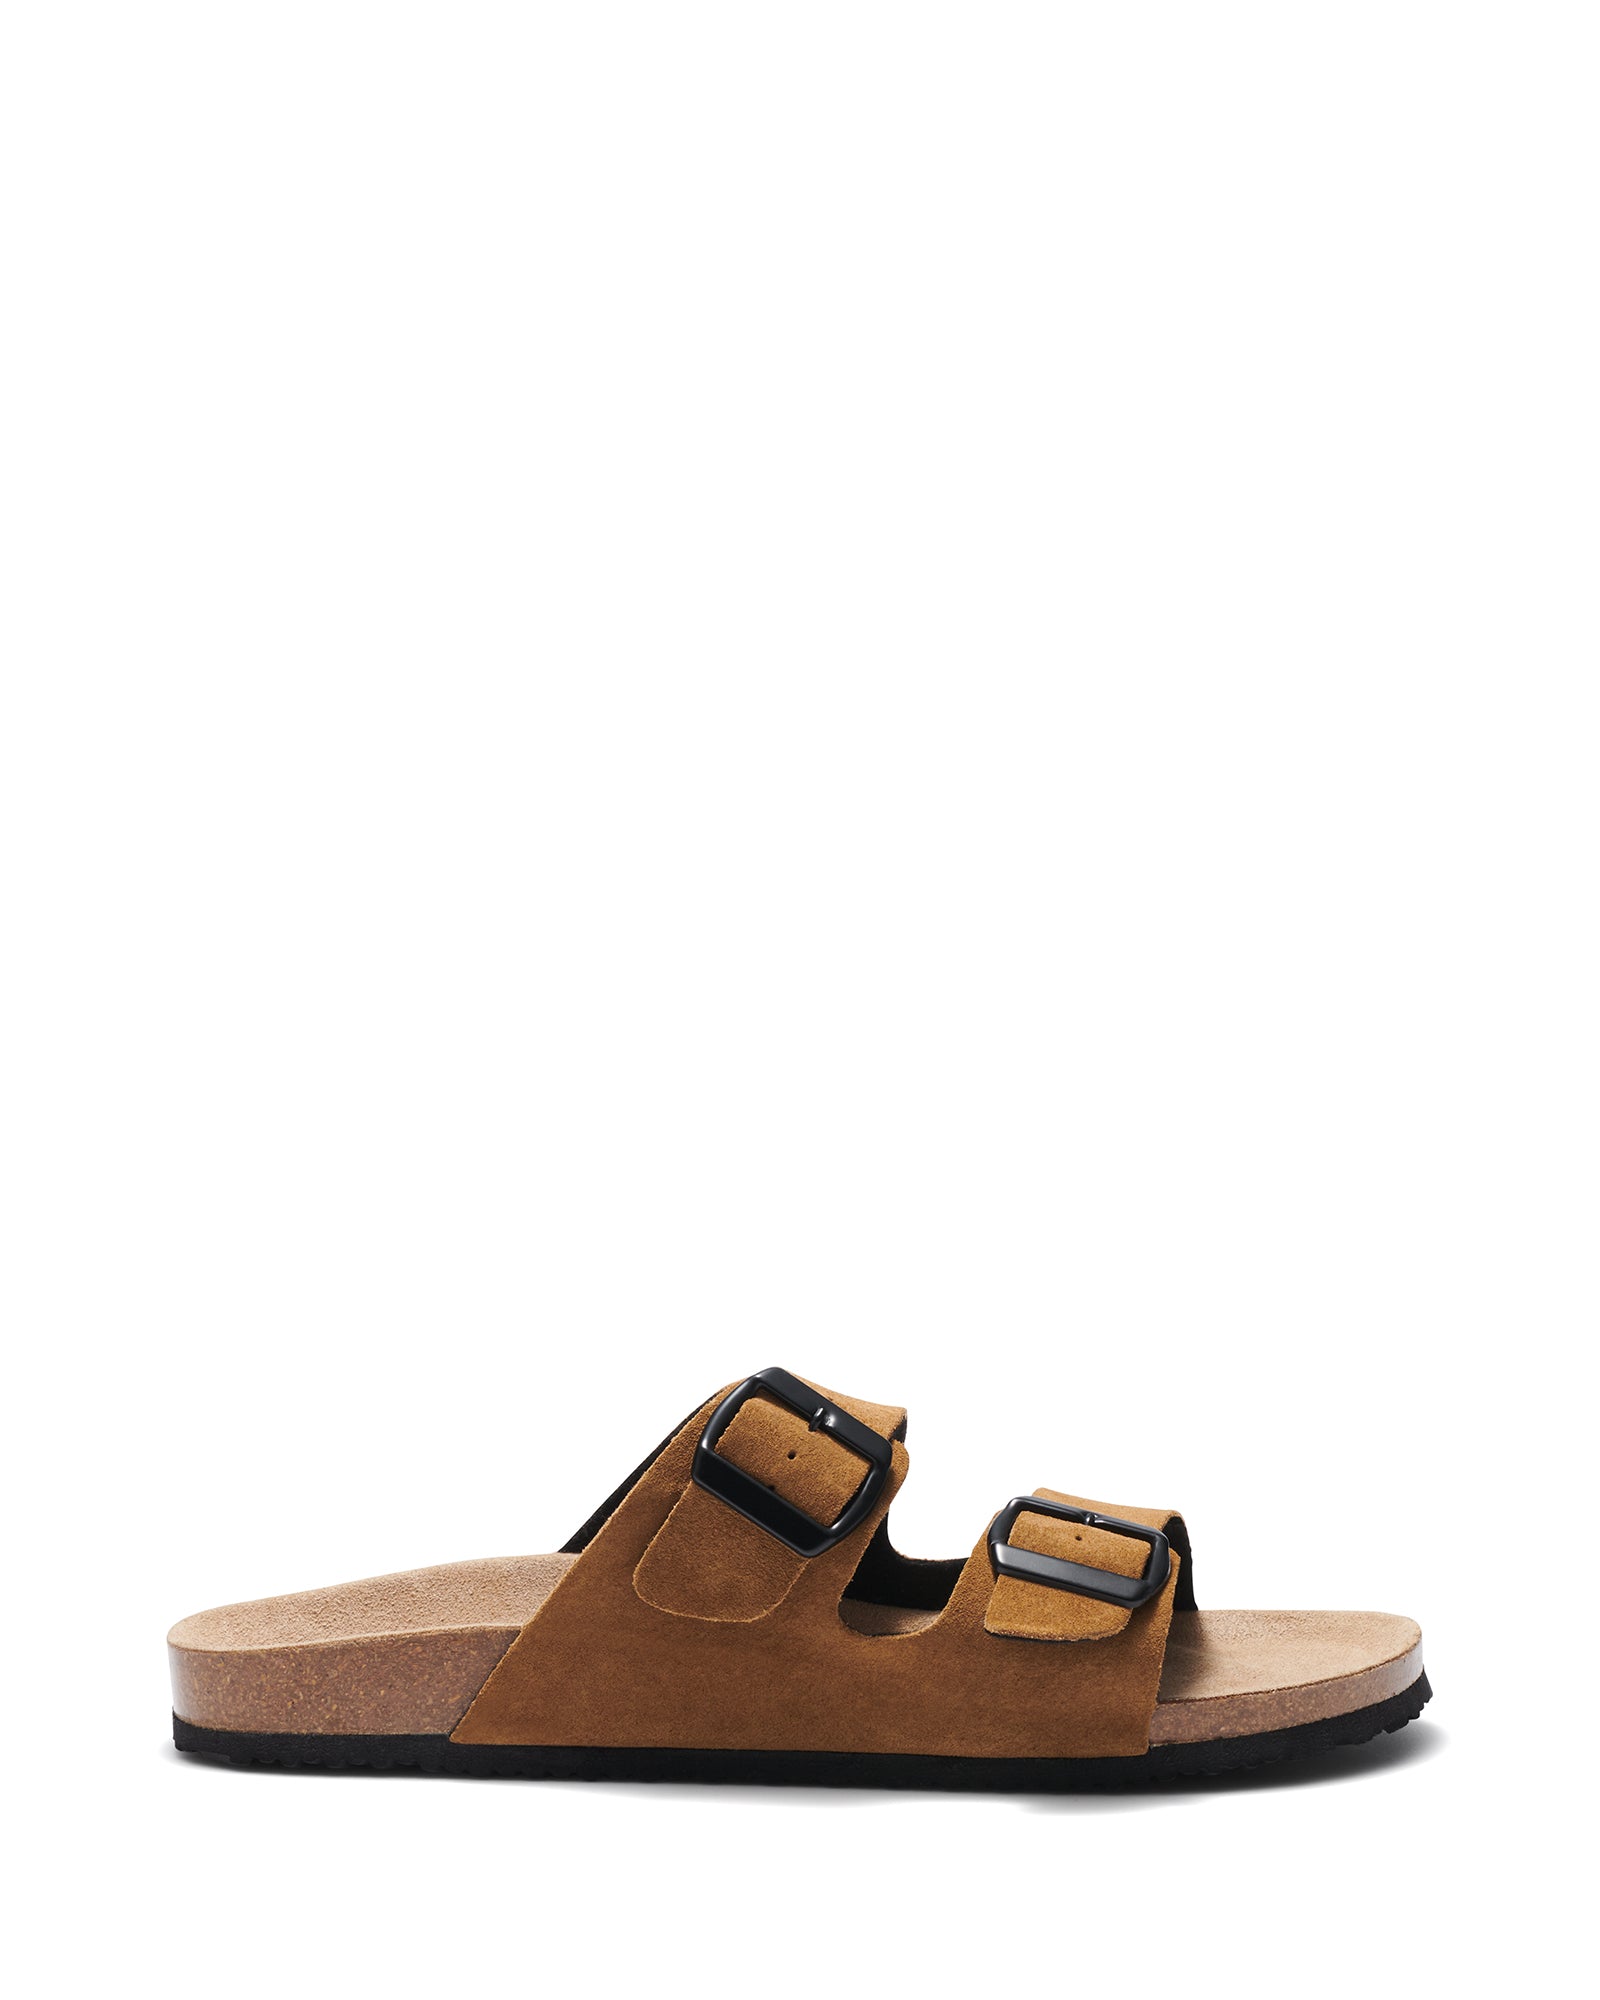 Uncut Shoes Ridley Tan | Men's Leather Sandal | Slide | Slip On